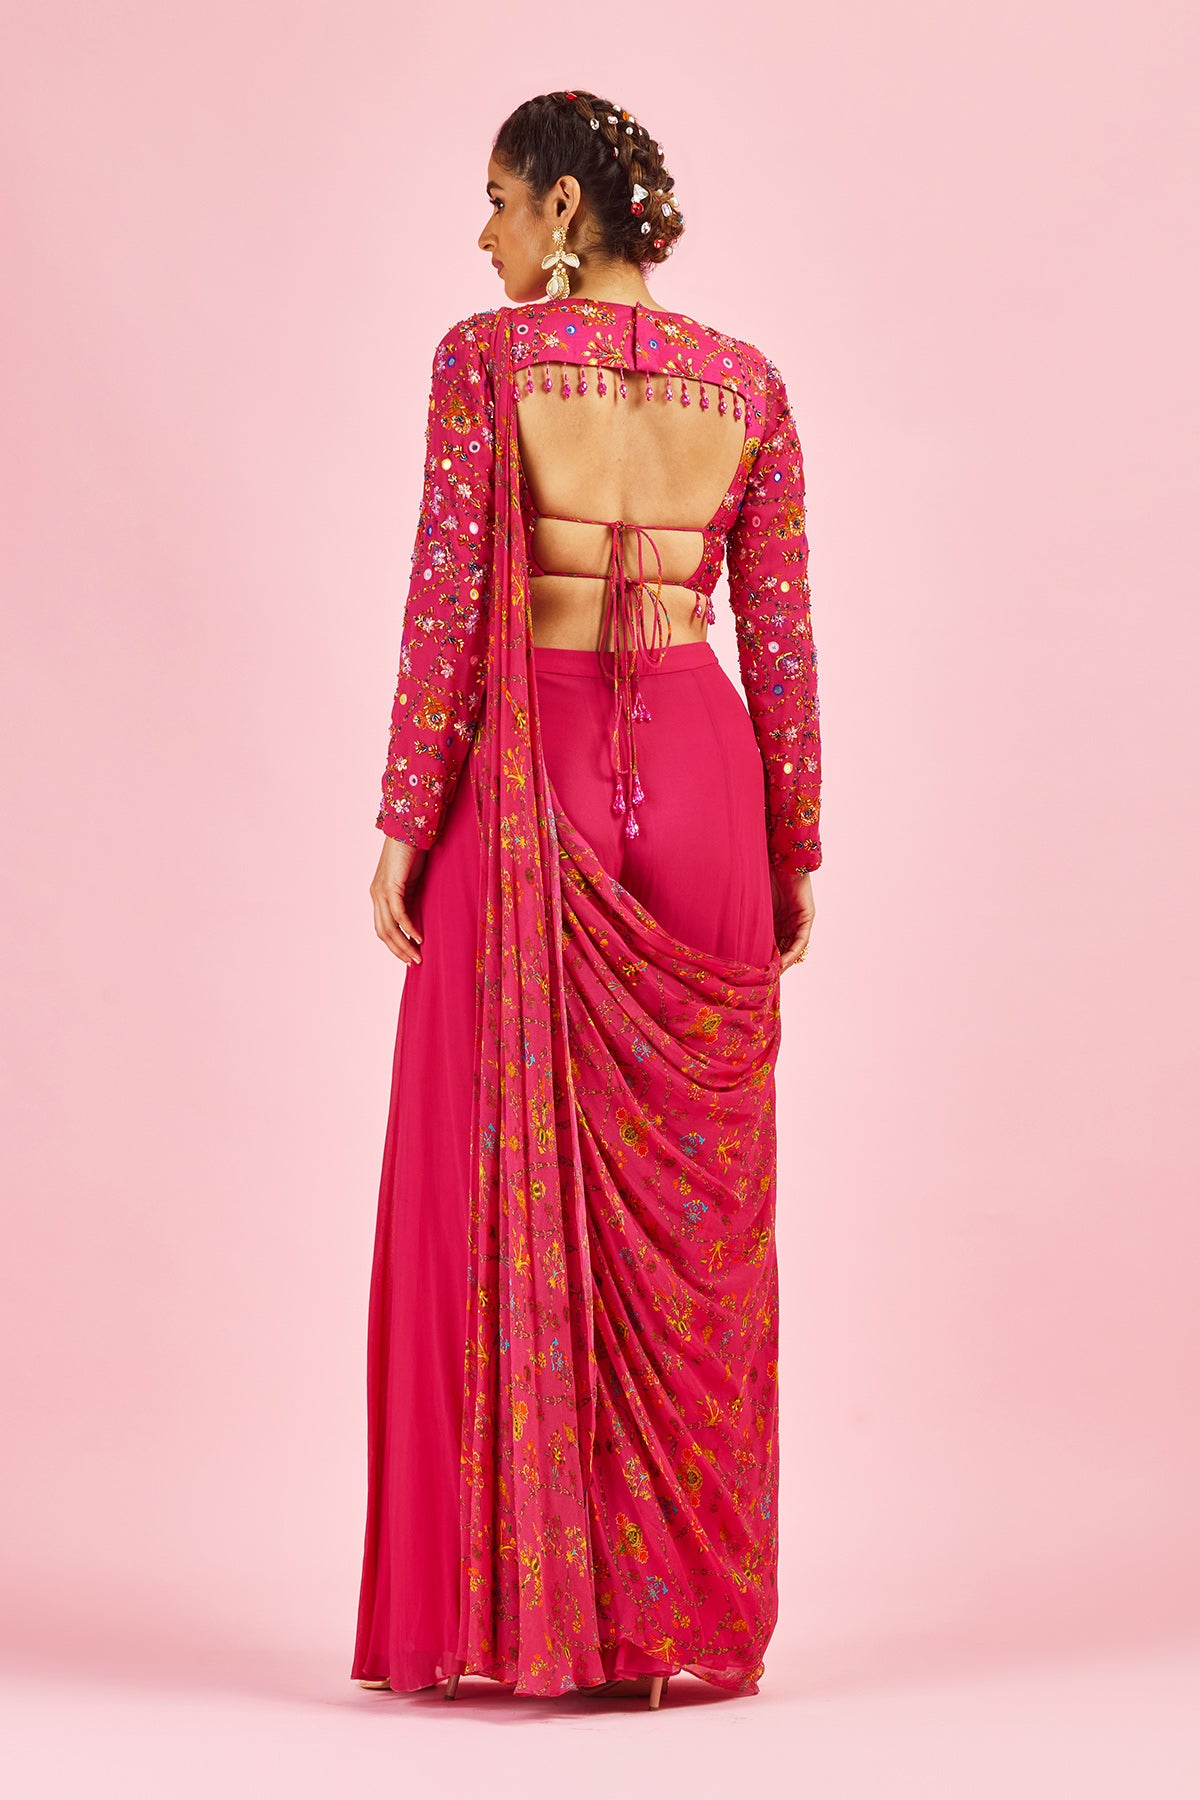 Fuchsia Pink Highlighted Blouse With Sharara Sari